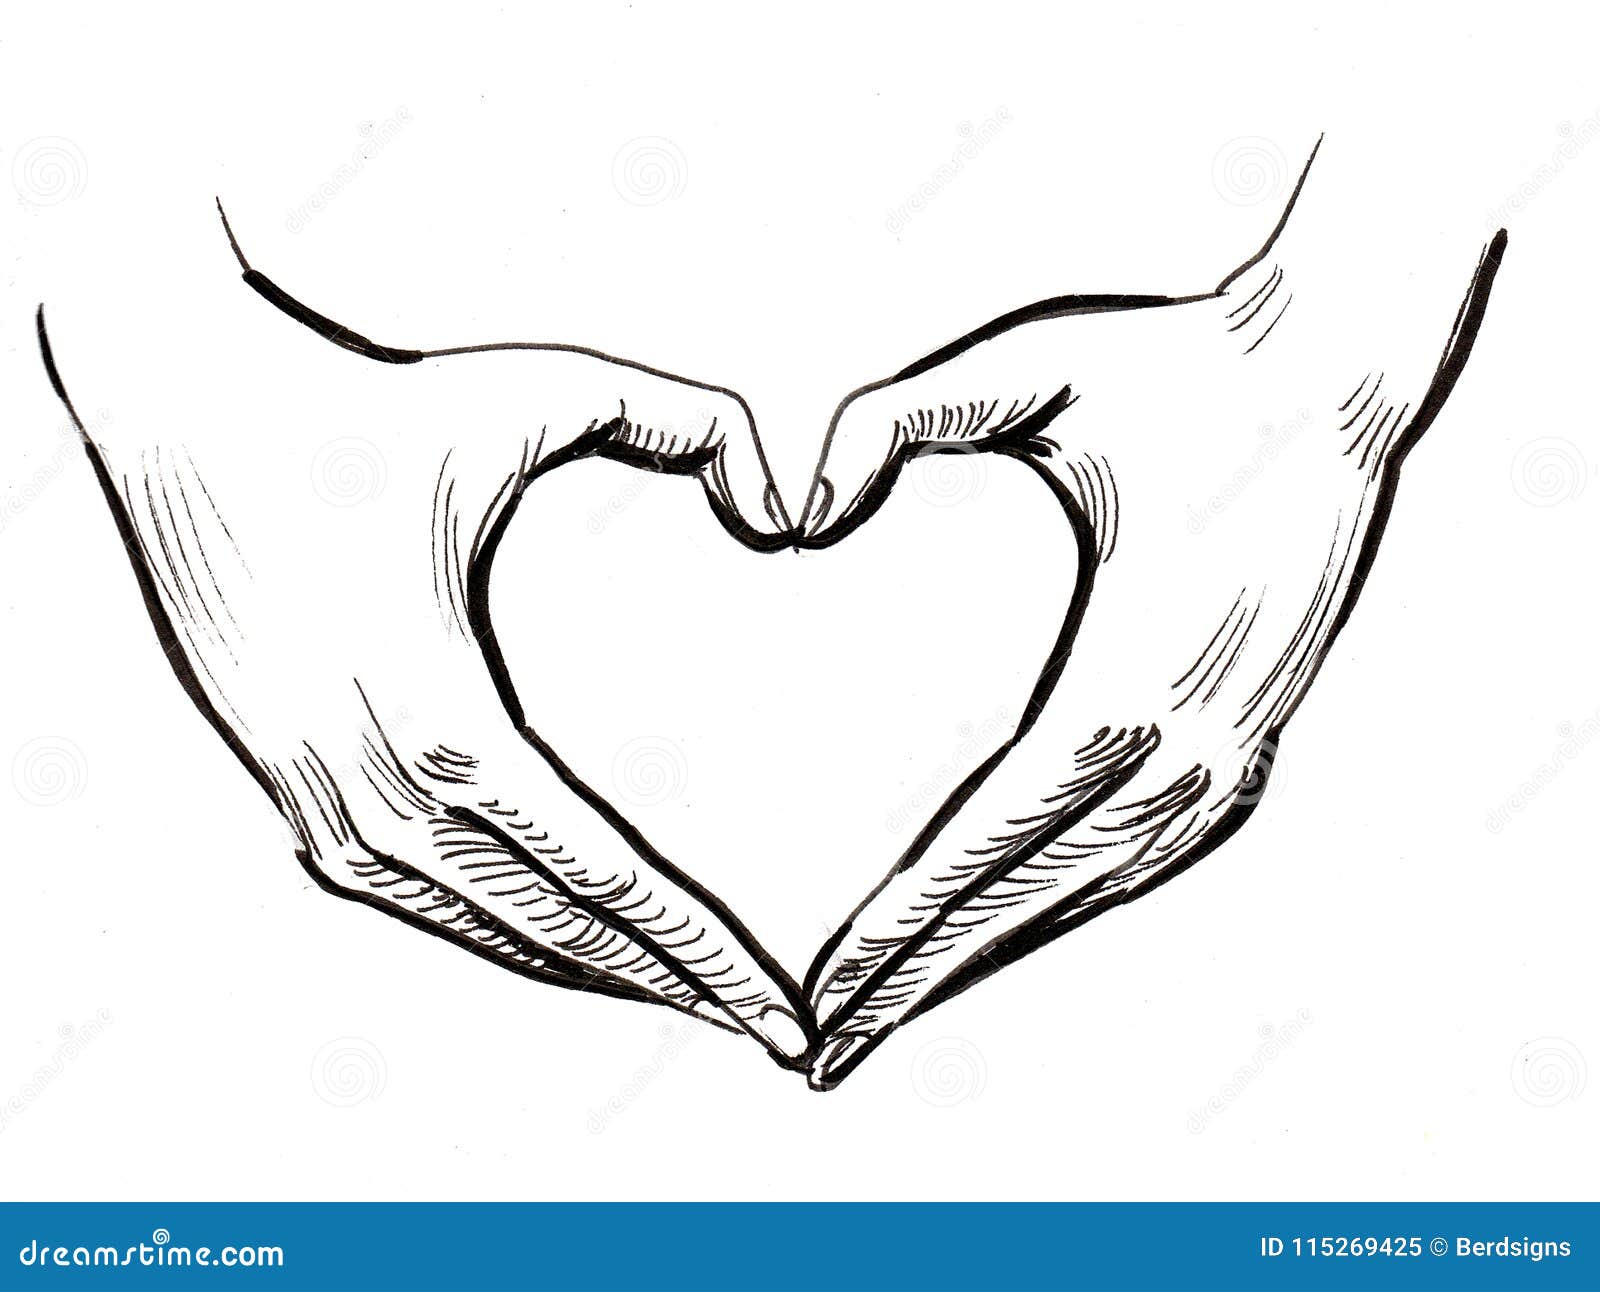 Hands and heart stock illustration. Illustration of heart ...